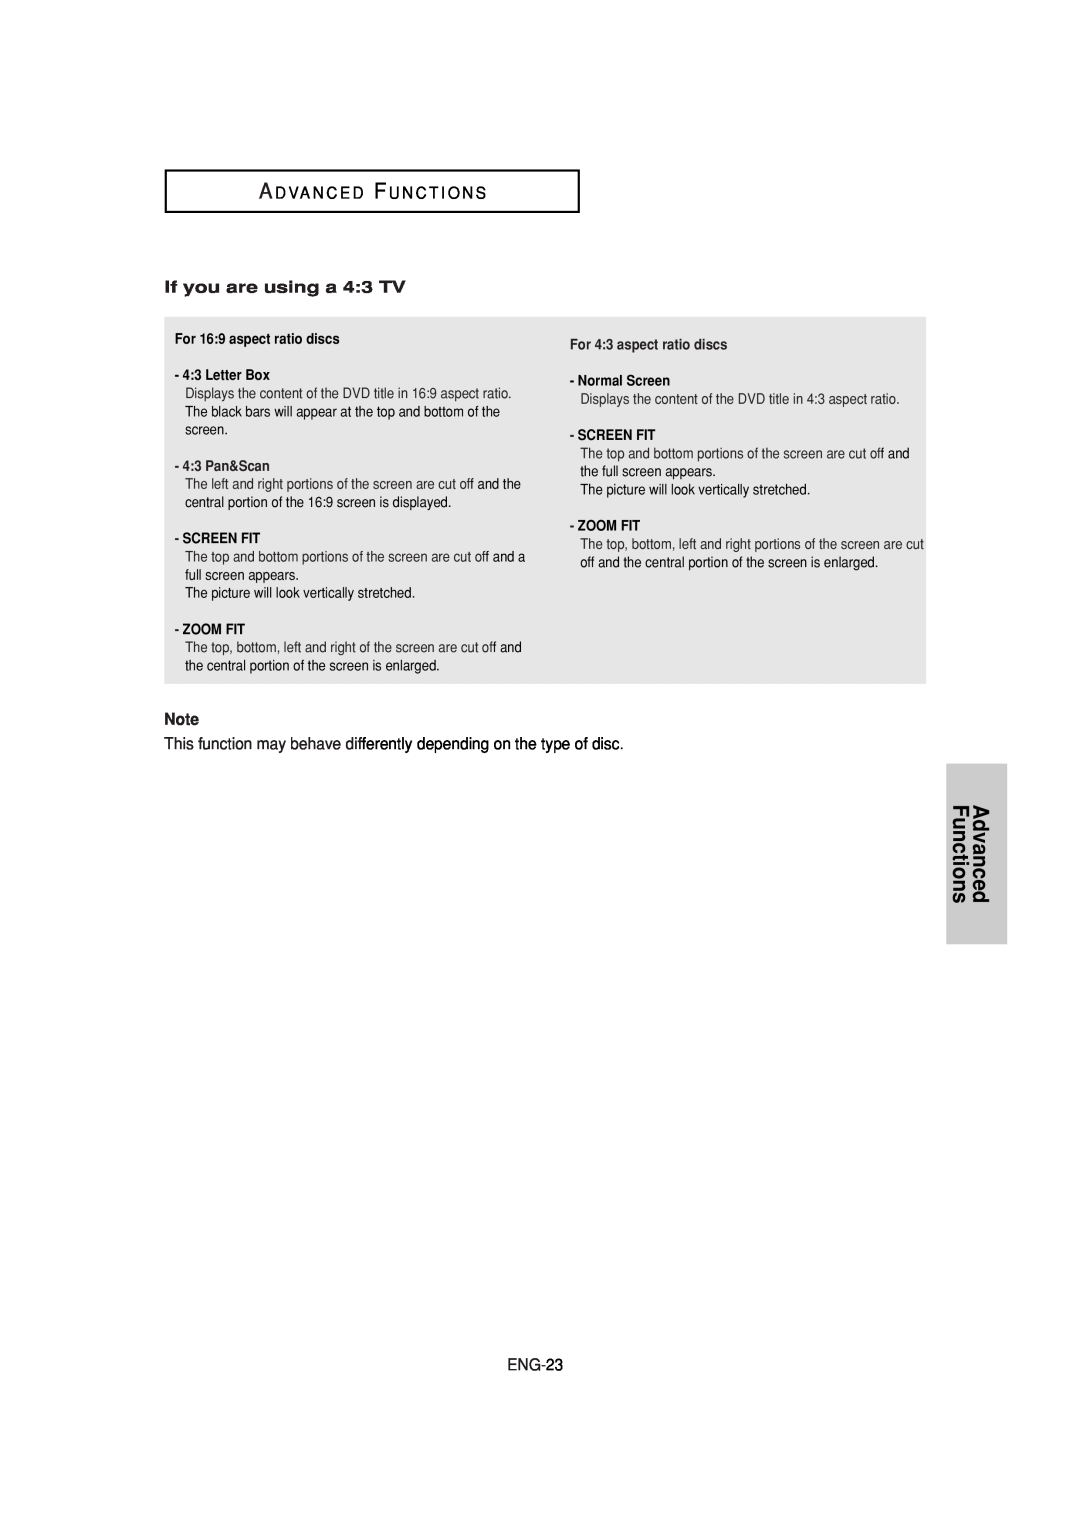 Samsung DVD-P181 manual Functions, A D Va N C E D F U N C T I O N S, If you are using a 43 TV, ENG-23 